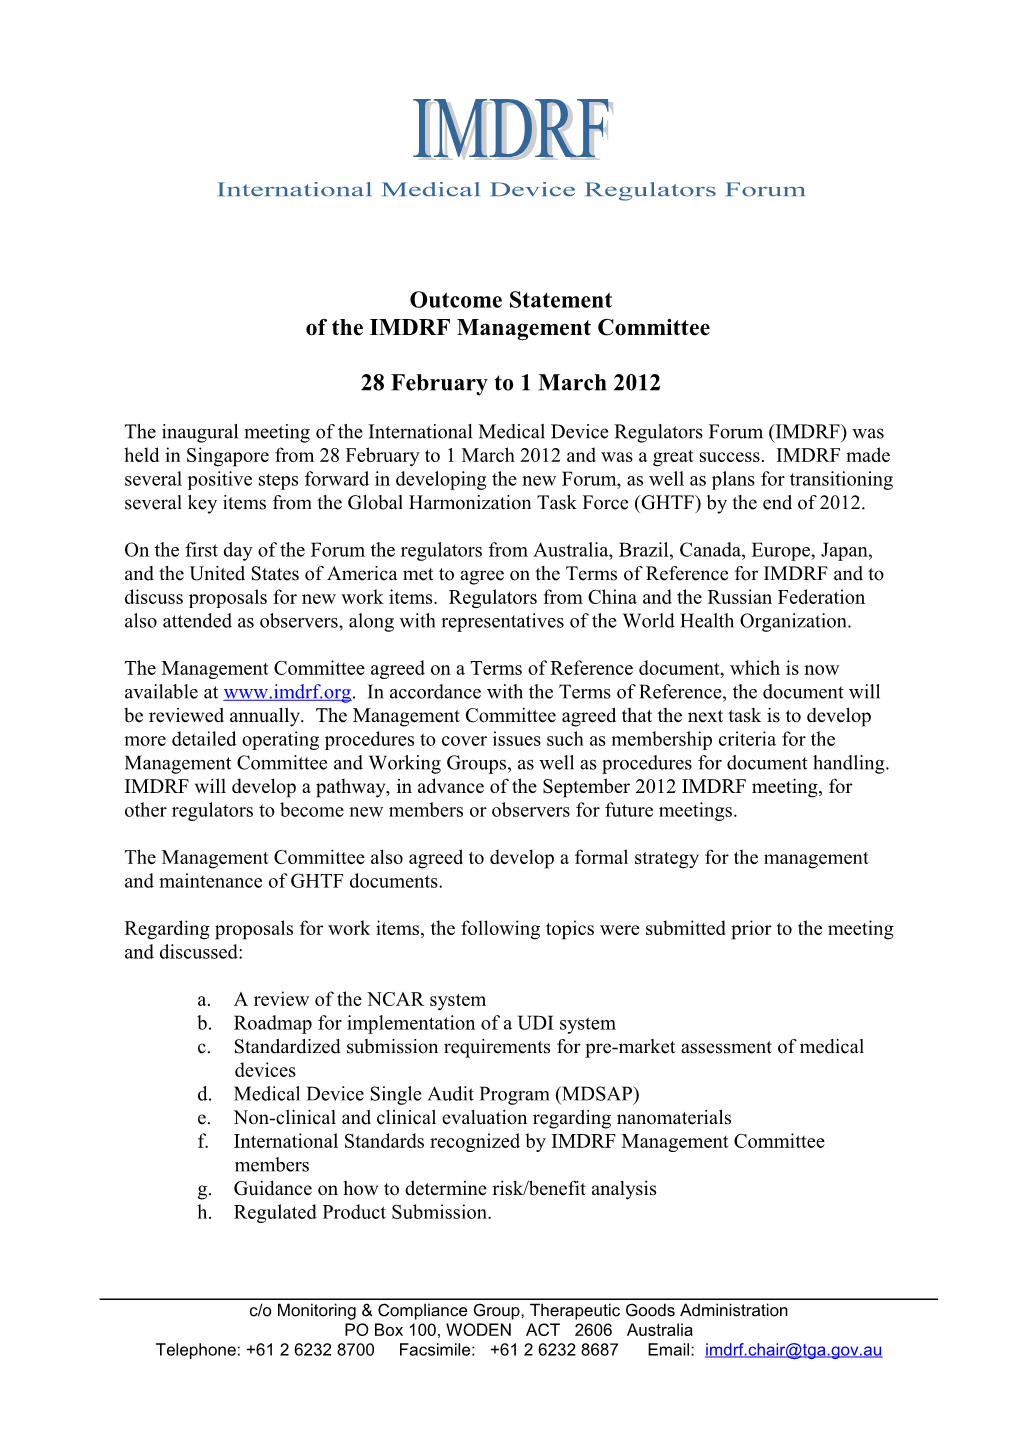 IMDRF Meeting 1 Singapore Feb 2012 Outcome Statement